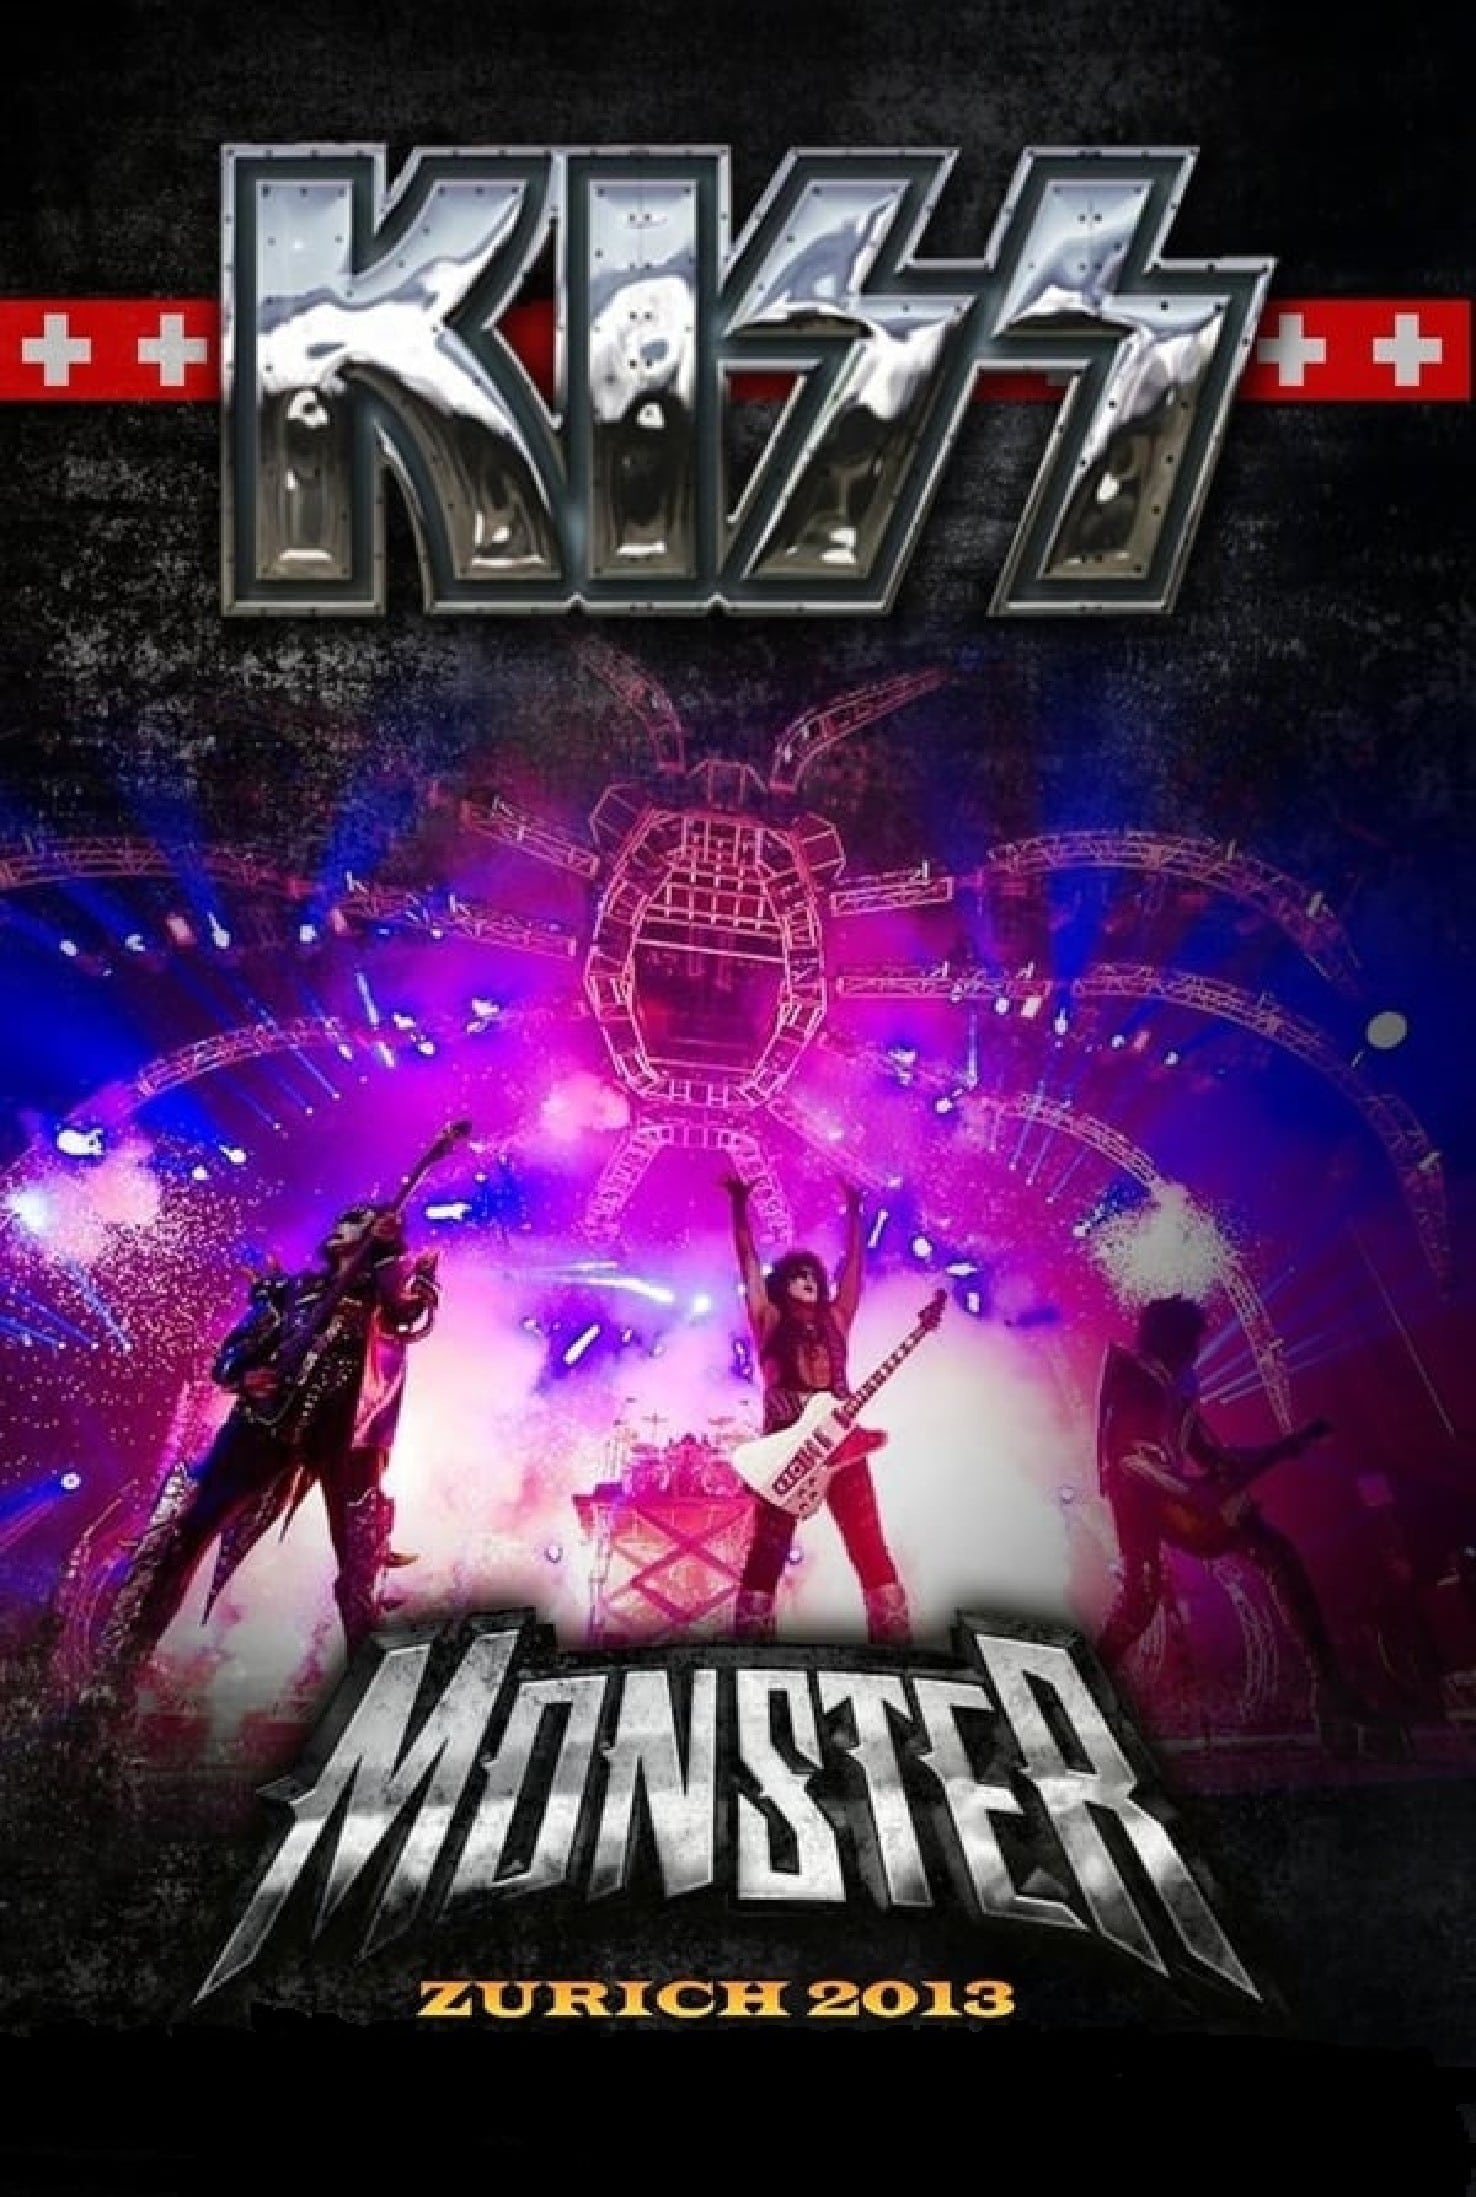 kiss monster tour poster